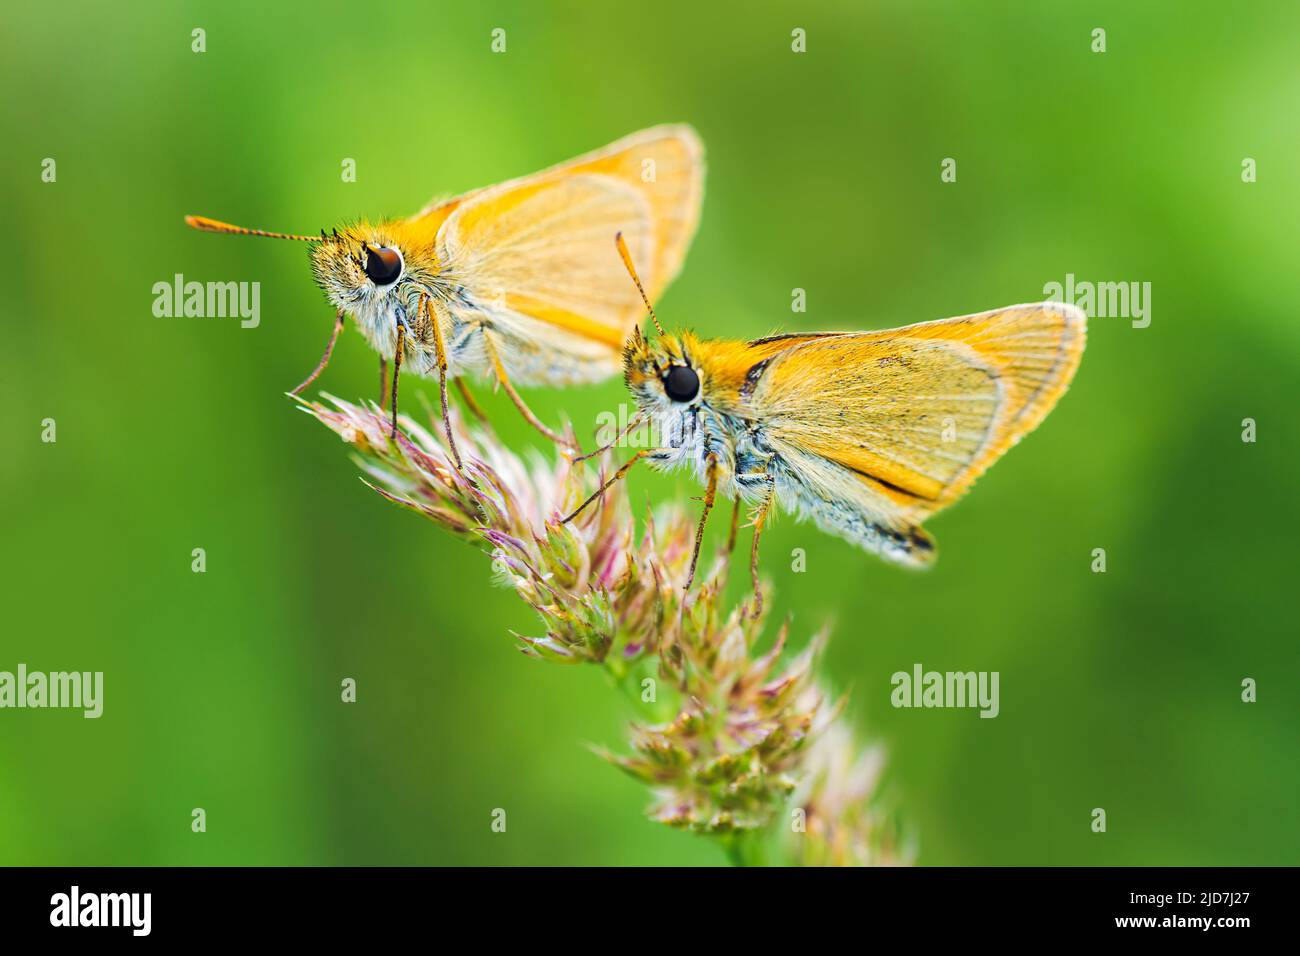 Two large skipper, ochlodes sylvanus butterfly sitting on grass stem. Animal nature bacgkround Stock Photo